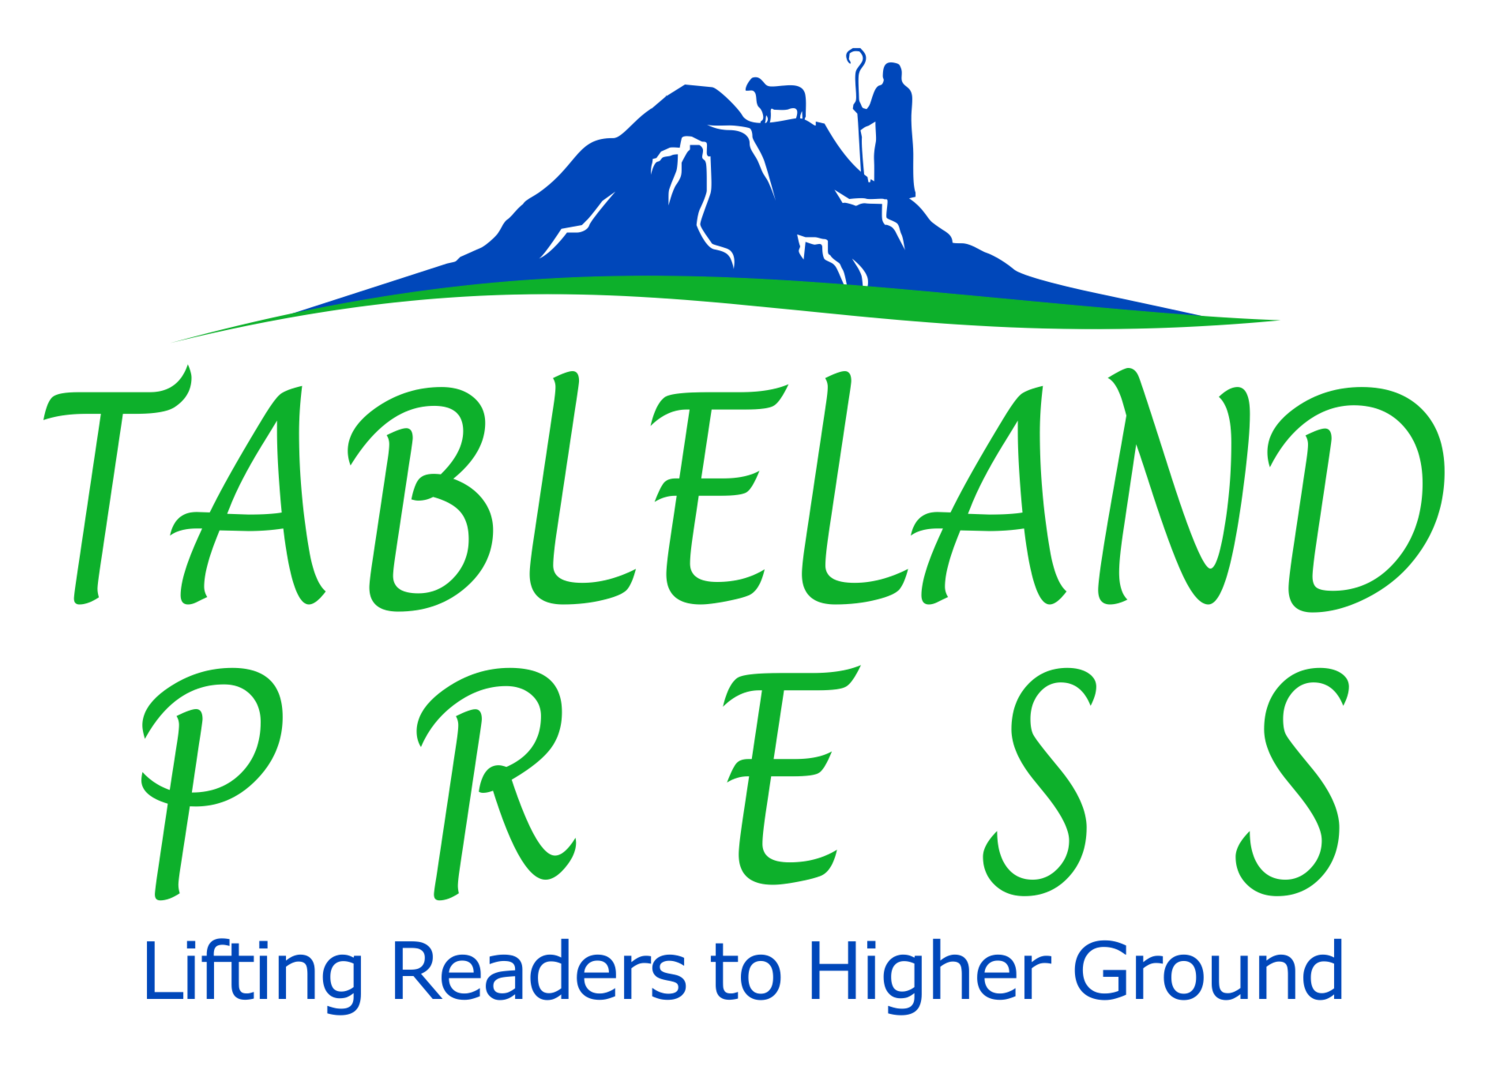 Tableland Press